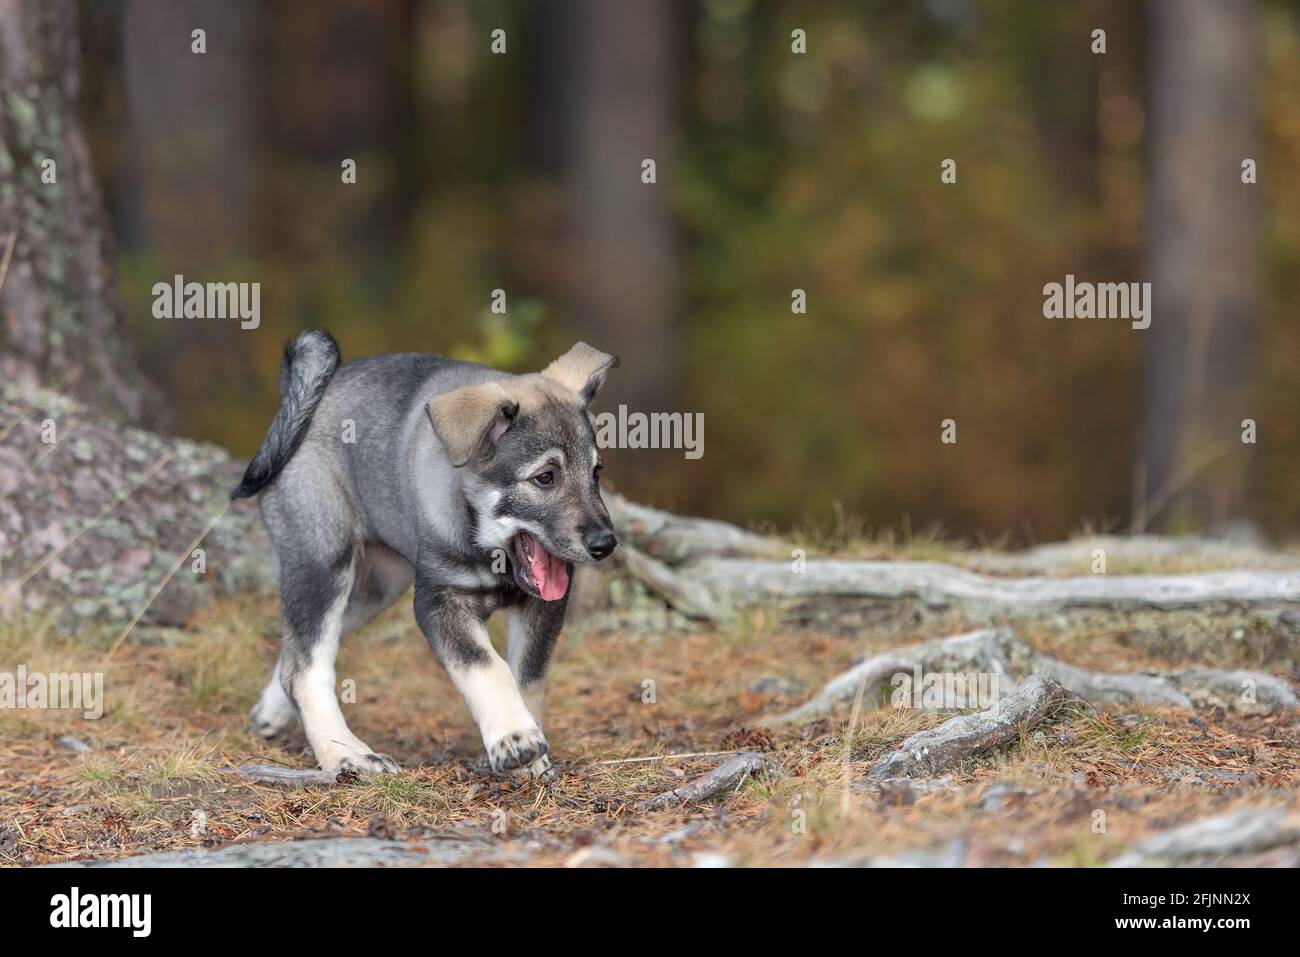 are swedish white elkhound aggressive